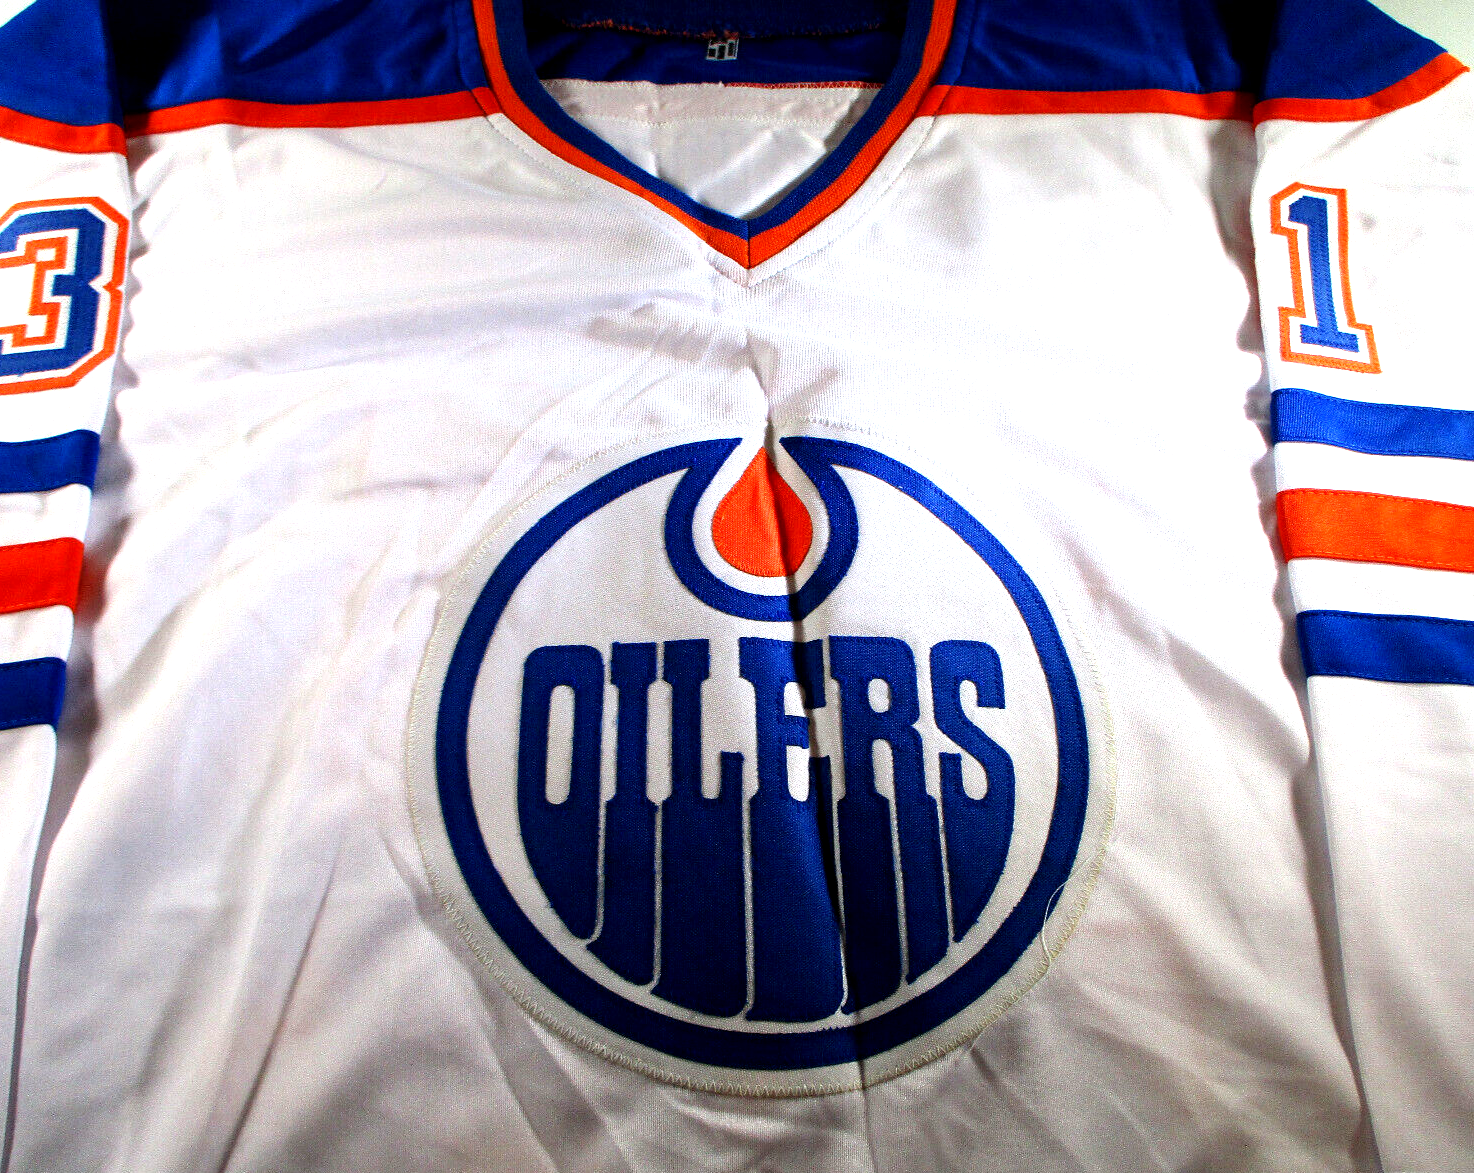 Grant Furh / Autographed Edmonton Oilers White Custom Jersey / JSA Witnessed COA